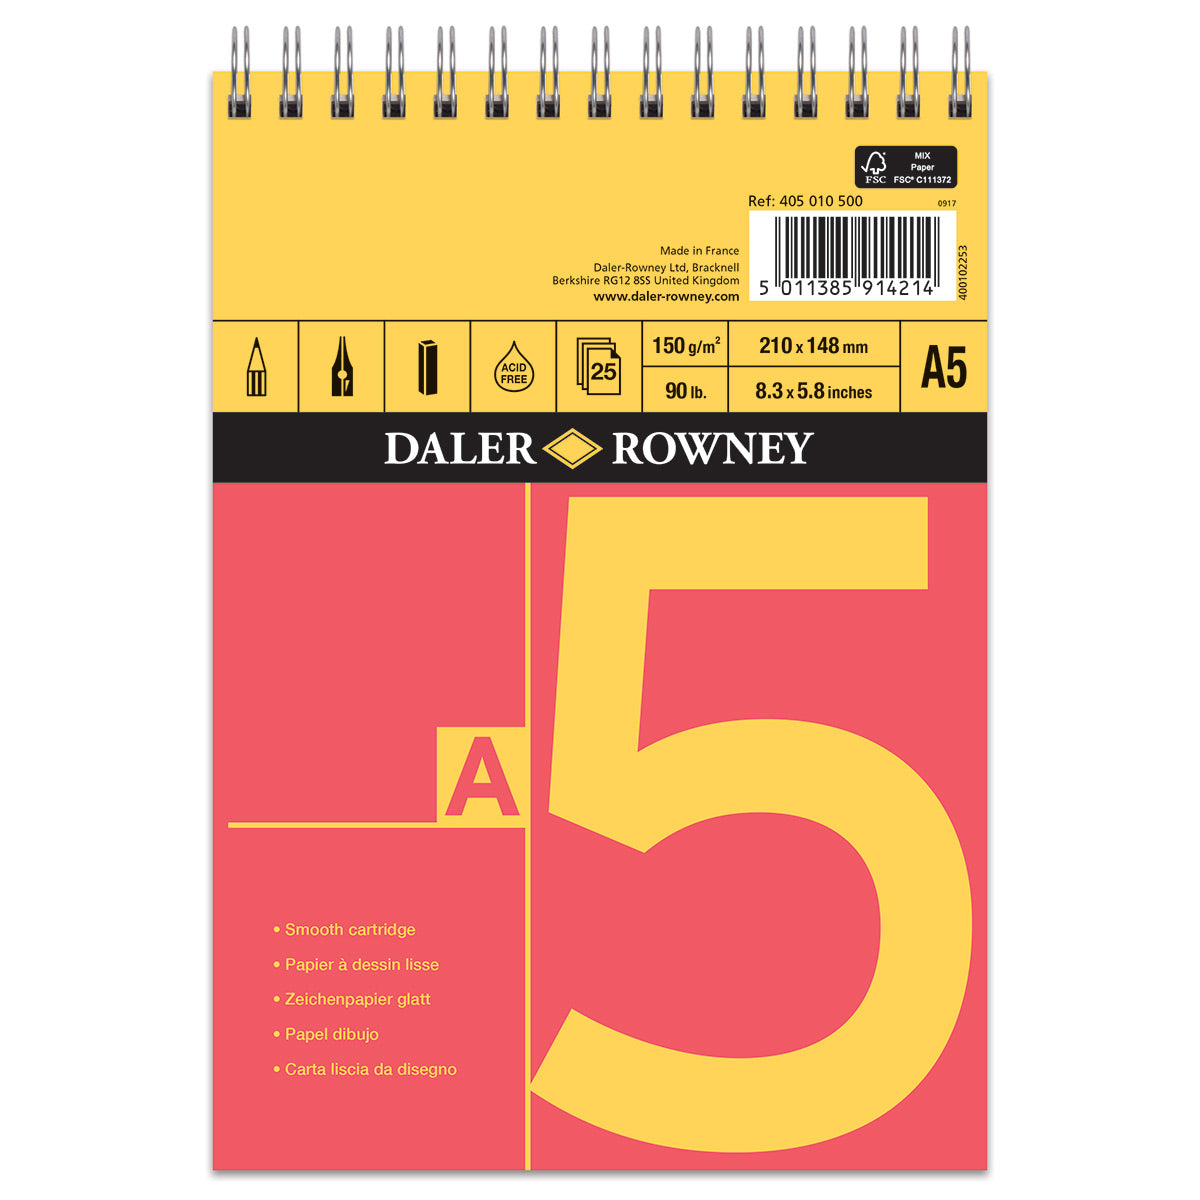 Daler Rowney - Blocco per schizzi a cartuccia a spirale rossa e gialla - A5 - 150 g/m²